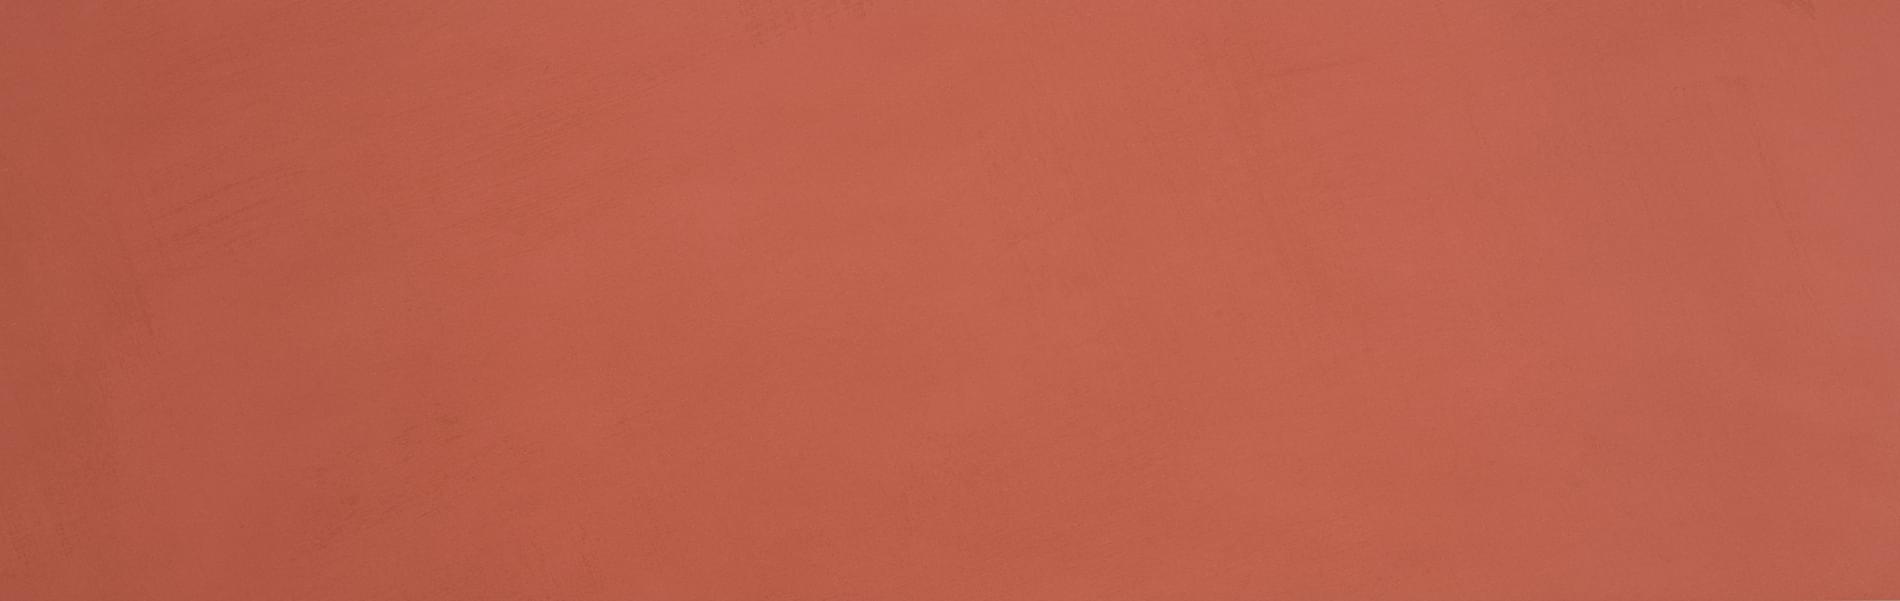 Colorker Impulse Garnet 31.6x100